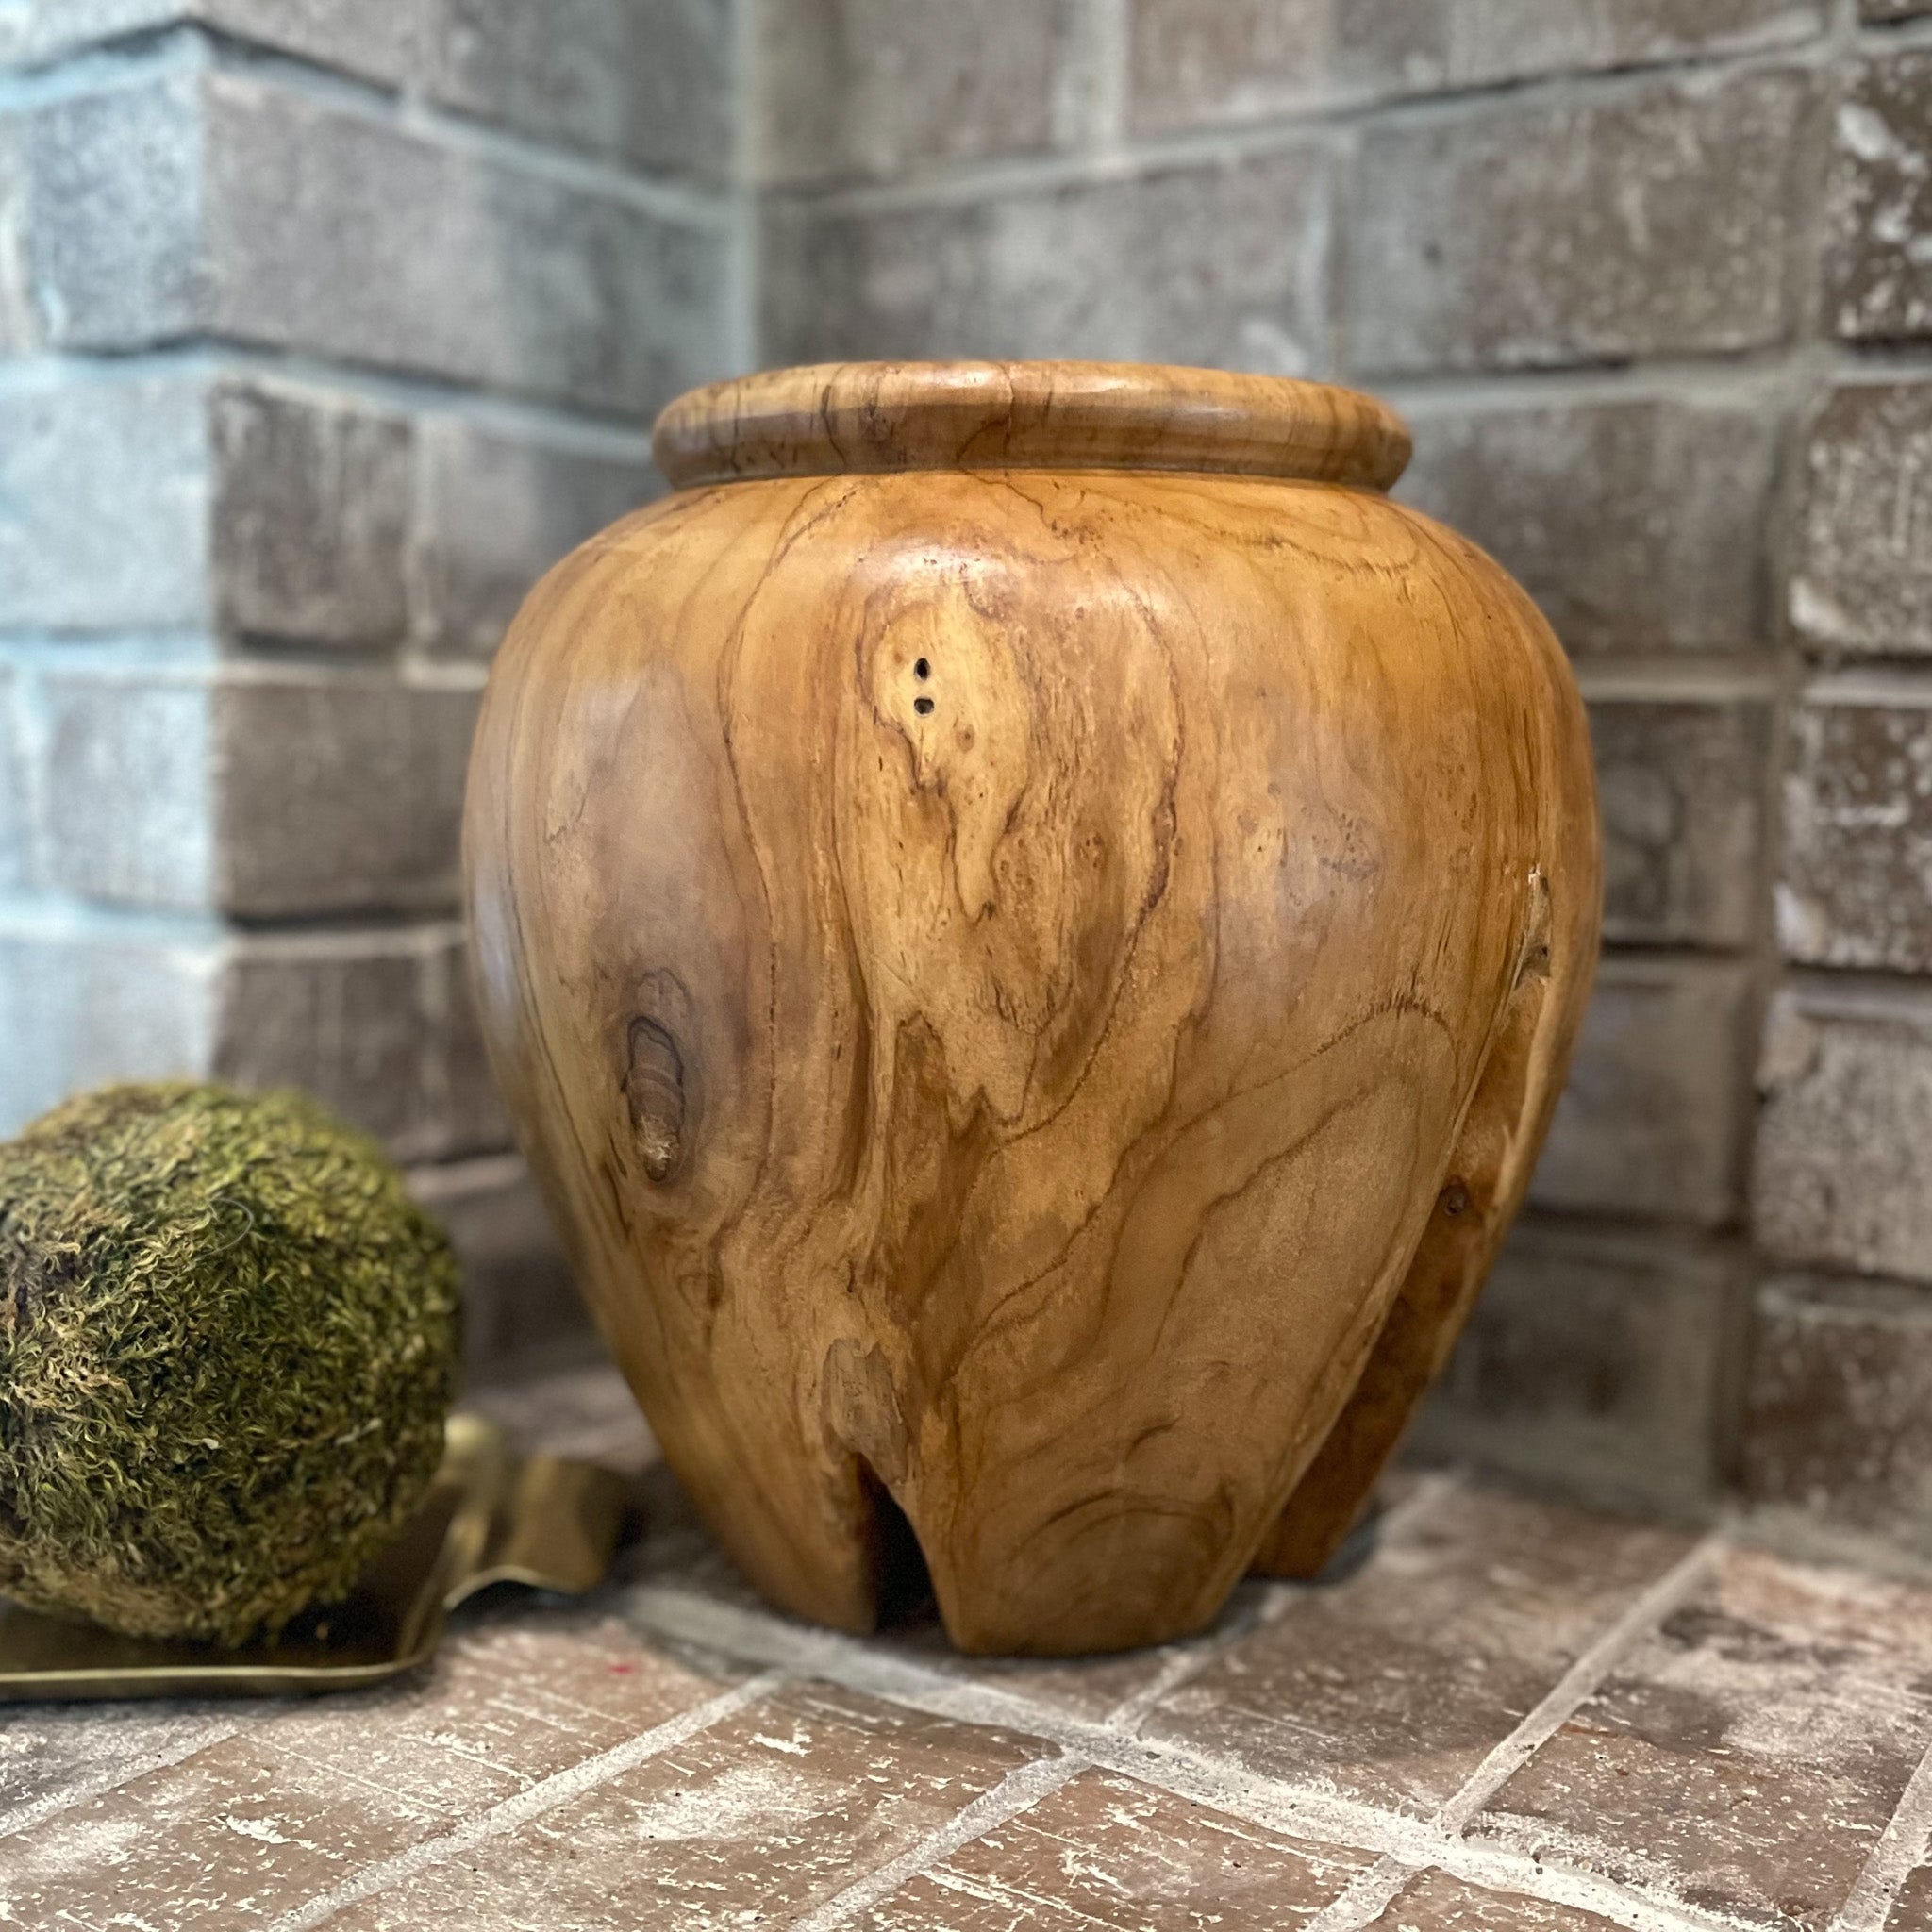 Deep Knot Teak Wood Vase, Decorative Wood Vase, Home sTyling Tips, Home Decor Oklahoma City